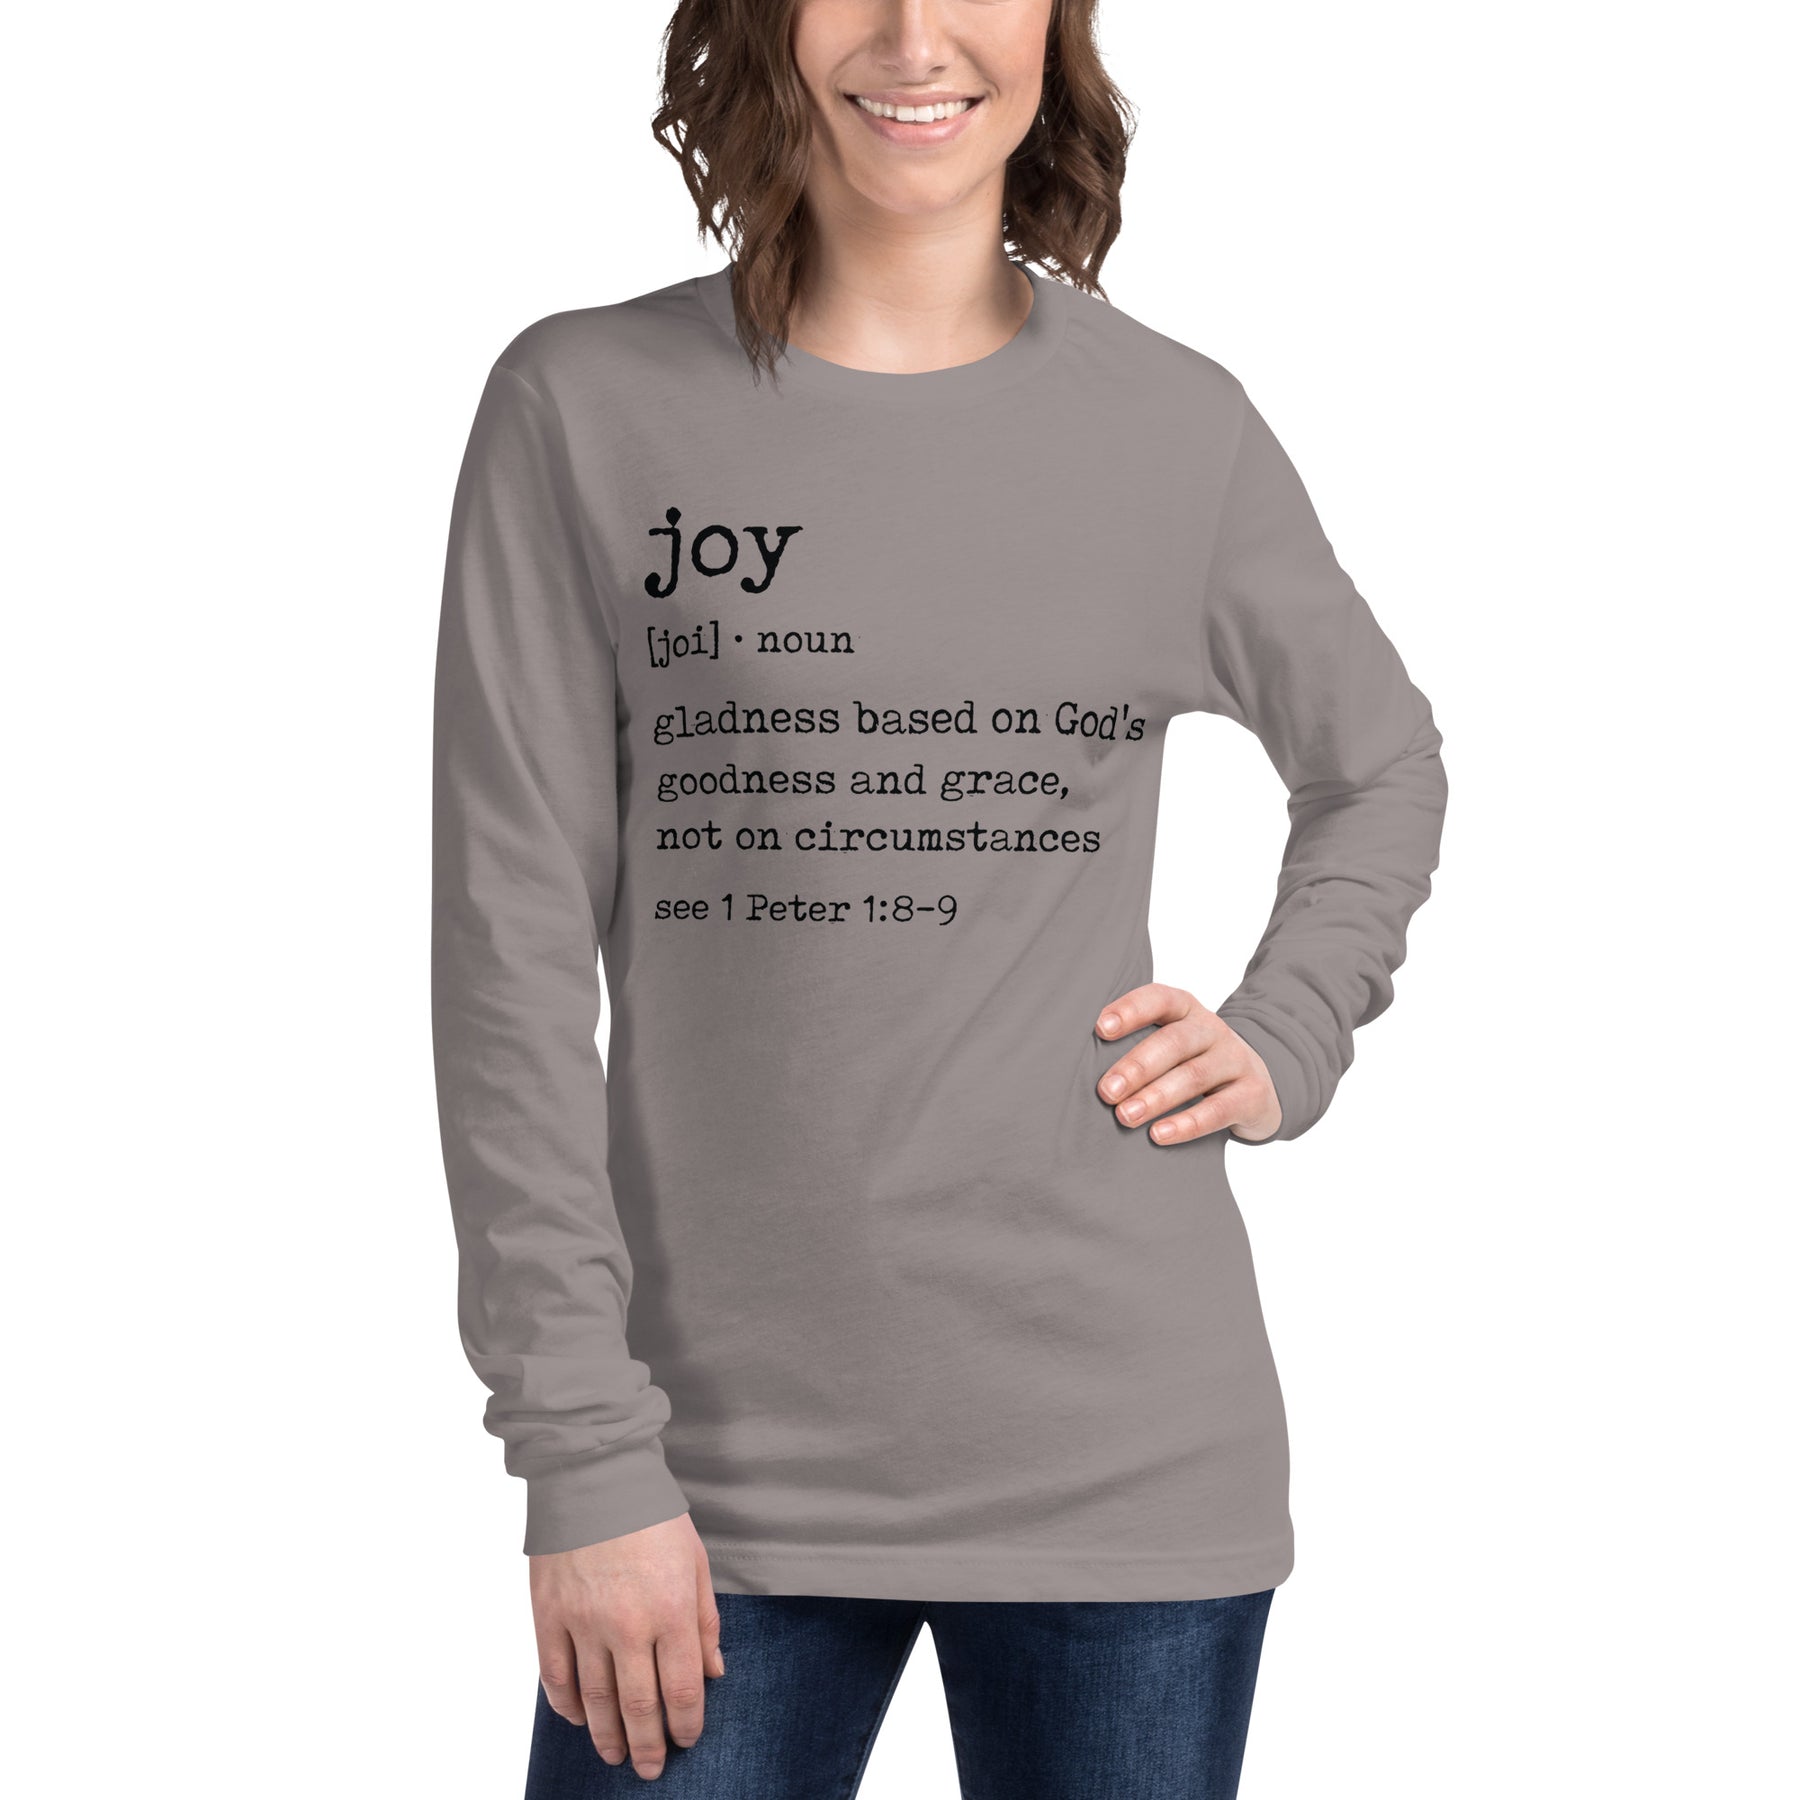 Joy Definition - Women's Long Sleeve T-Shirt